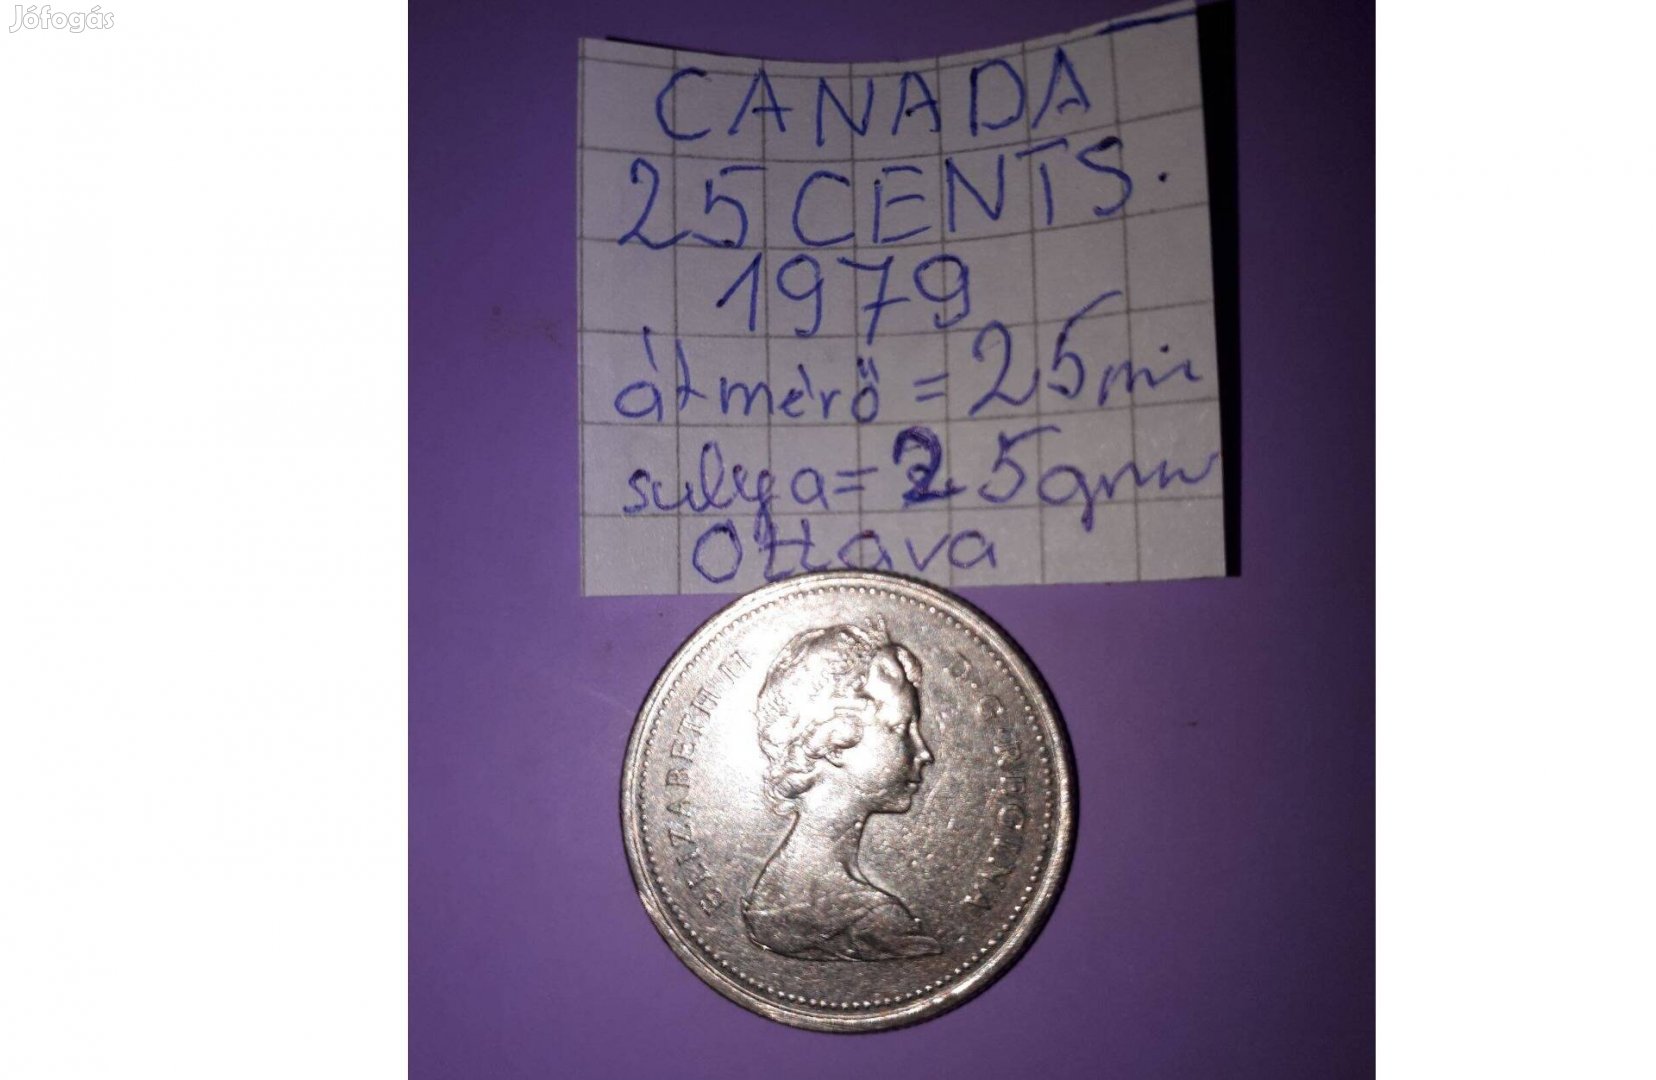 Canada 25 cent 1979 Ottava